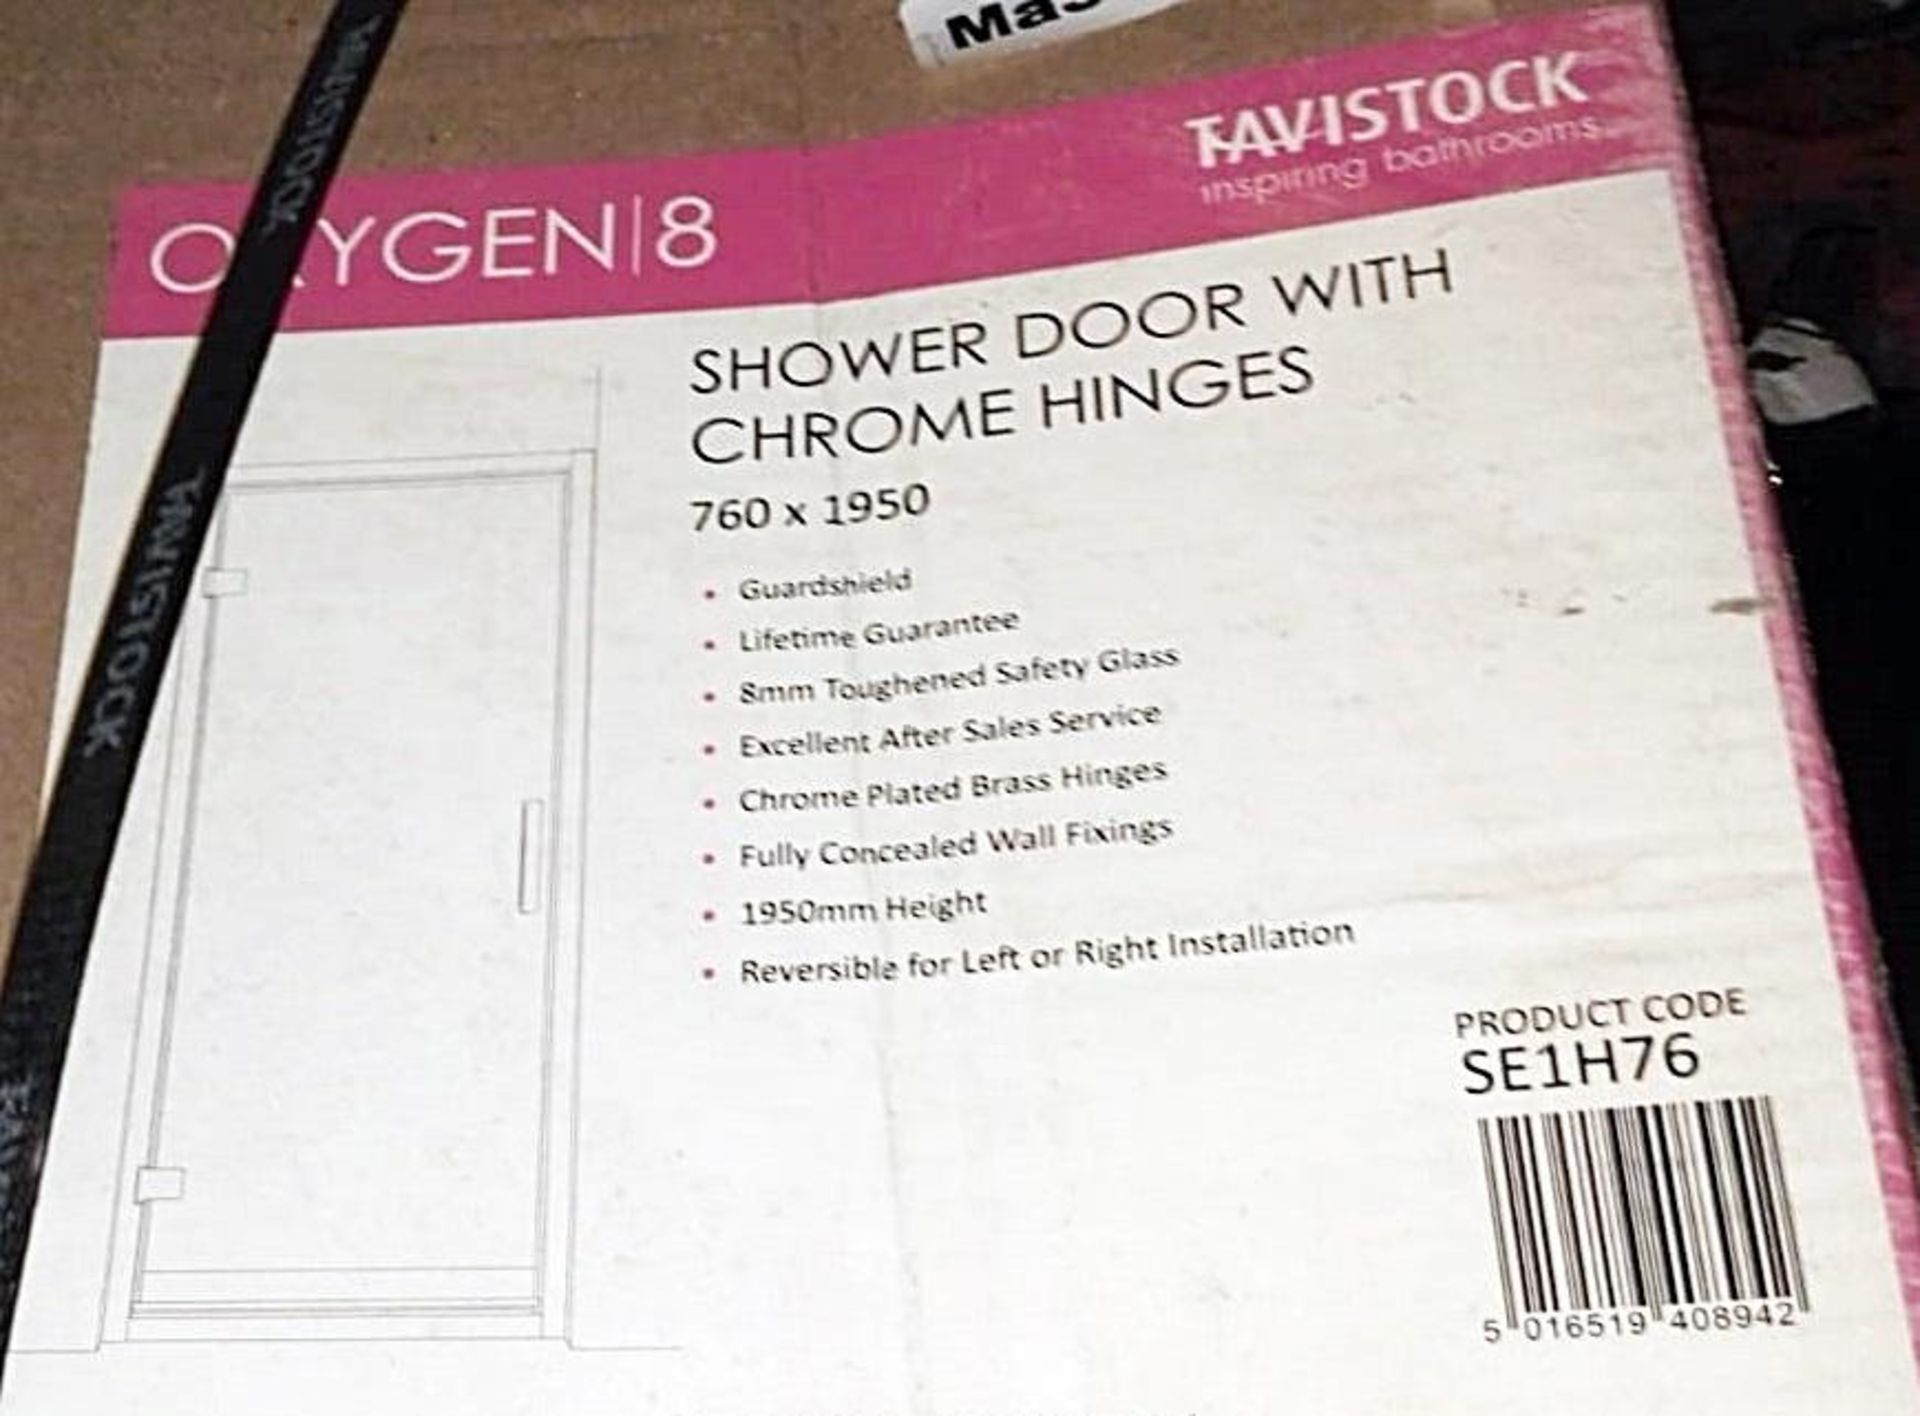 1 x Tavistock 'OXYGEN 8' Shower Door With Chrome Hidges - Dimensions: 760 x 1950mm - Ref: ma359 - Un - Image 2 of 2